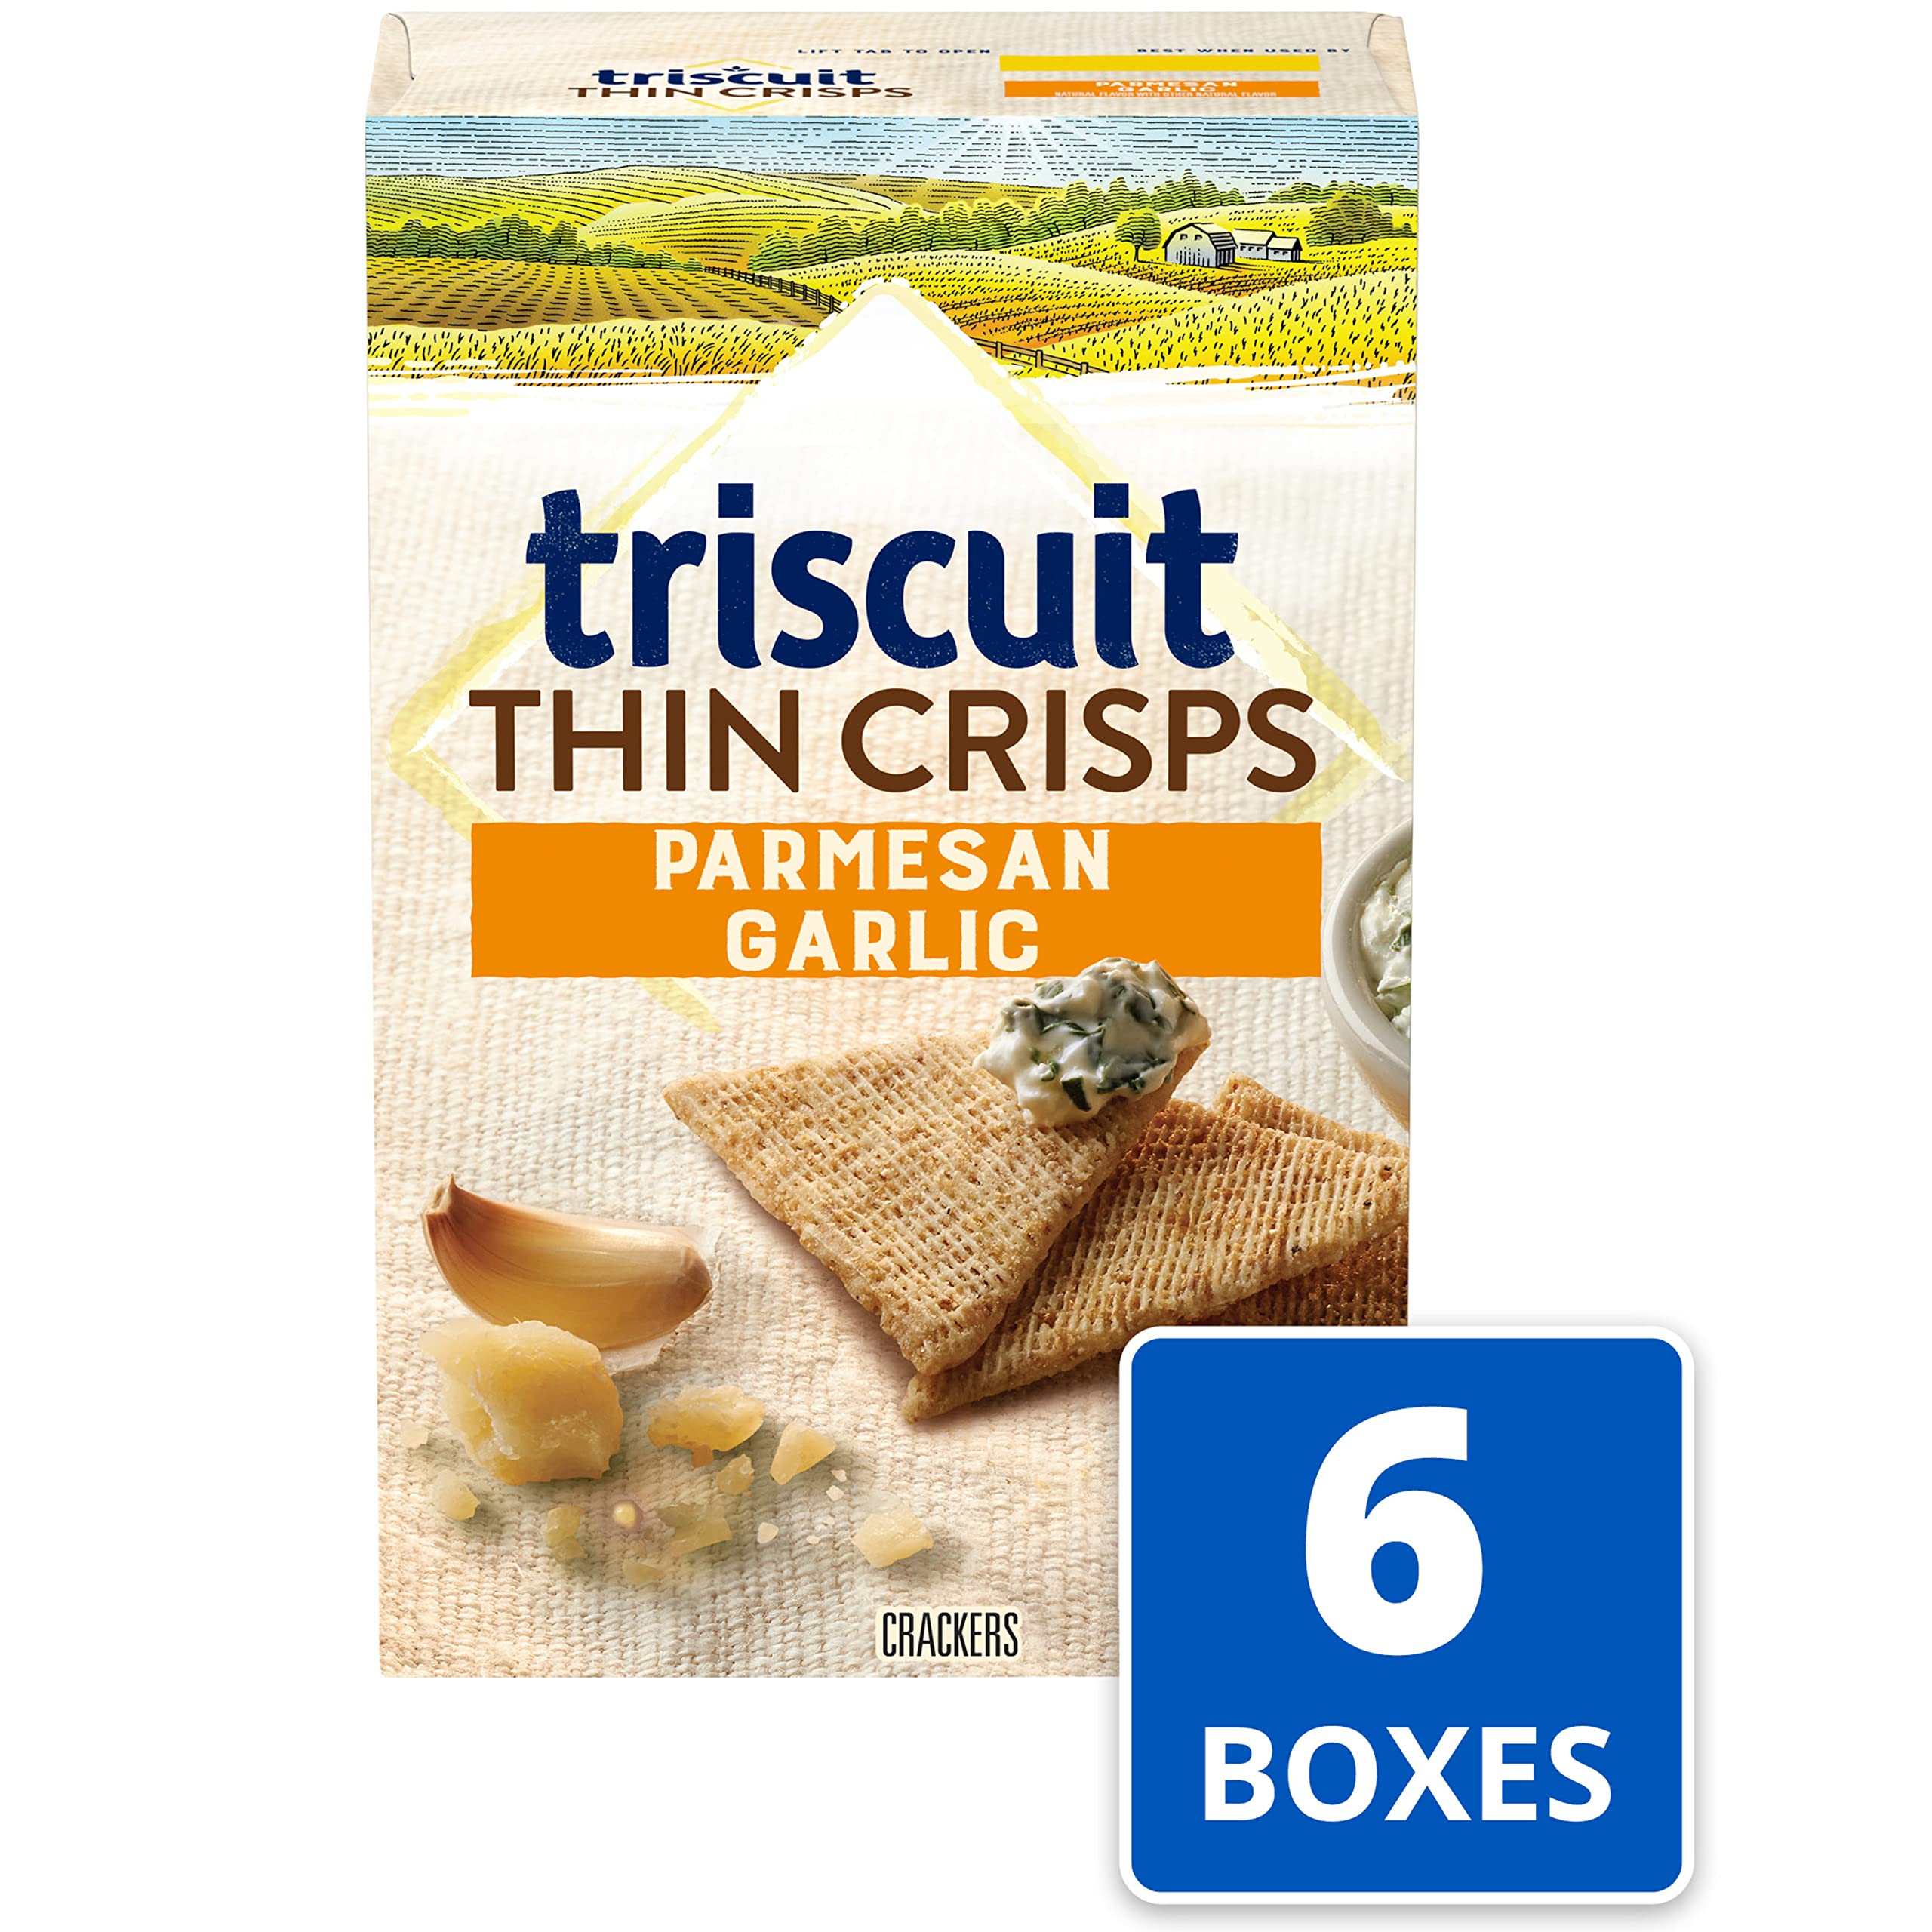 Pack of 6 Triscuit Thin Crisps Parmesan Garlic Whole Grain Wheat Crackers, 7.1 Ounce $11.64 @ Amazon